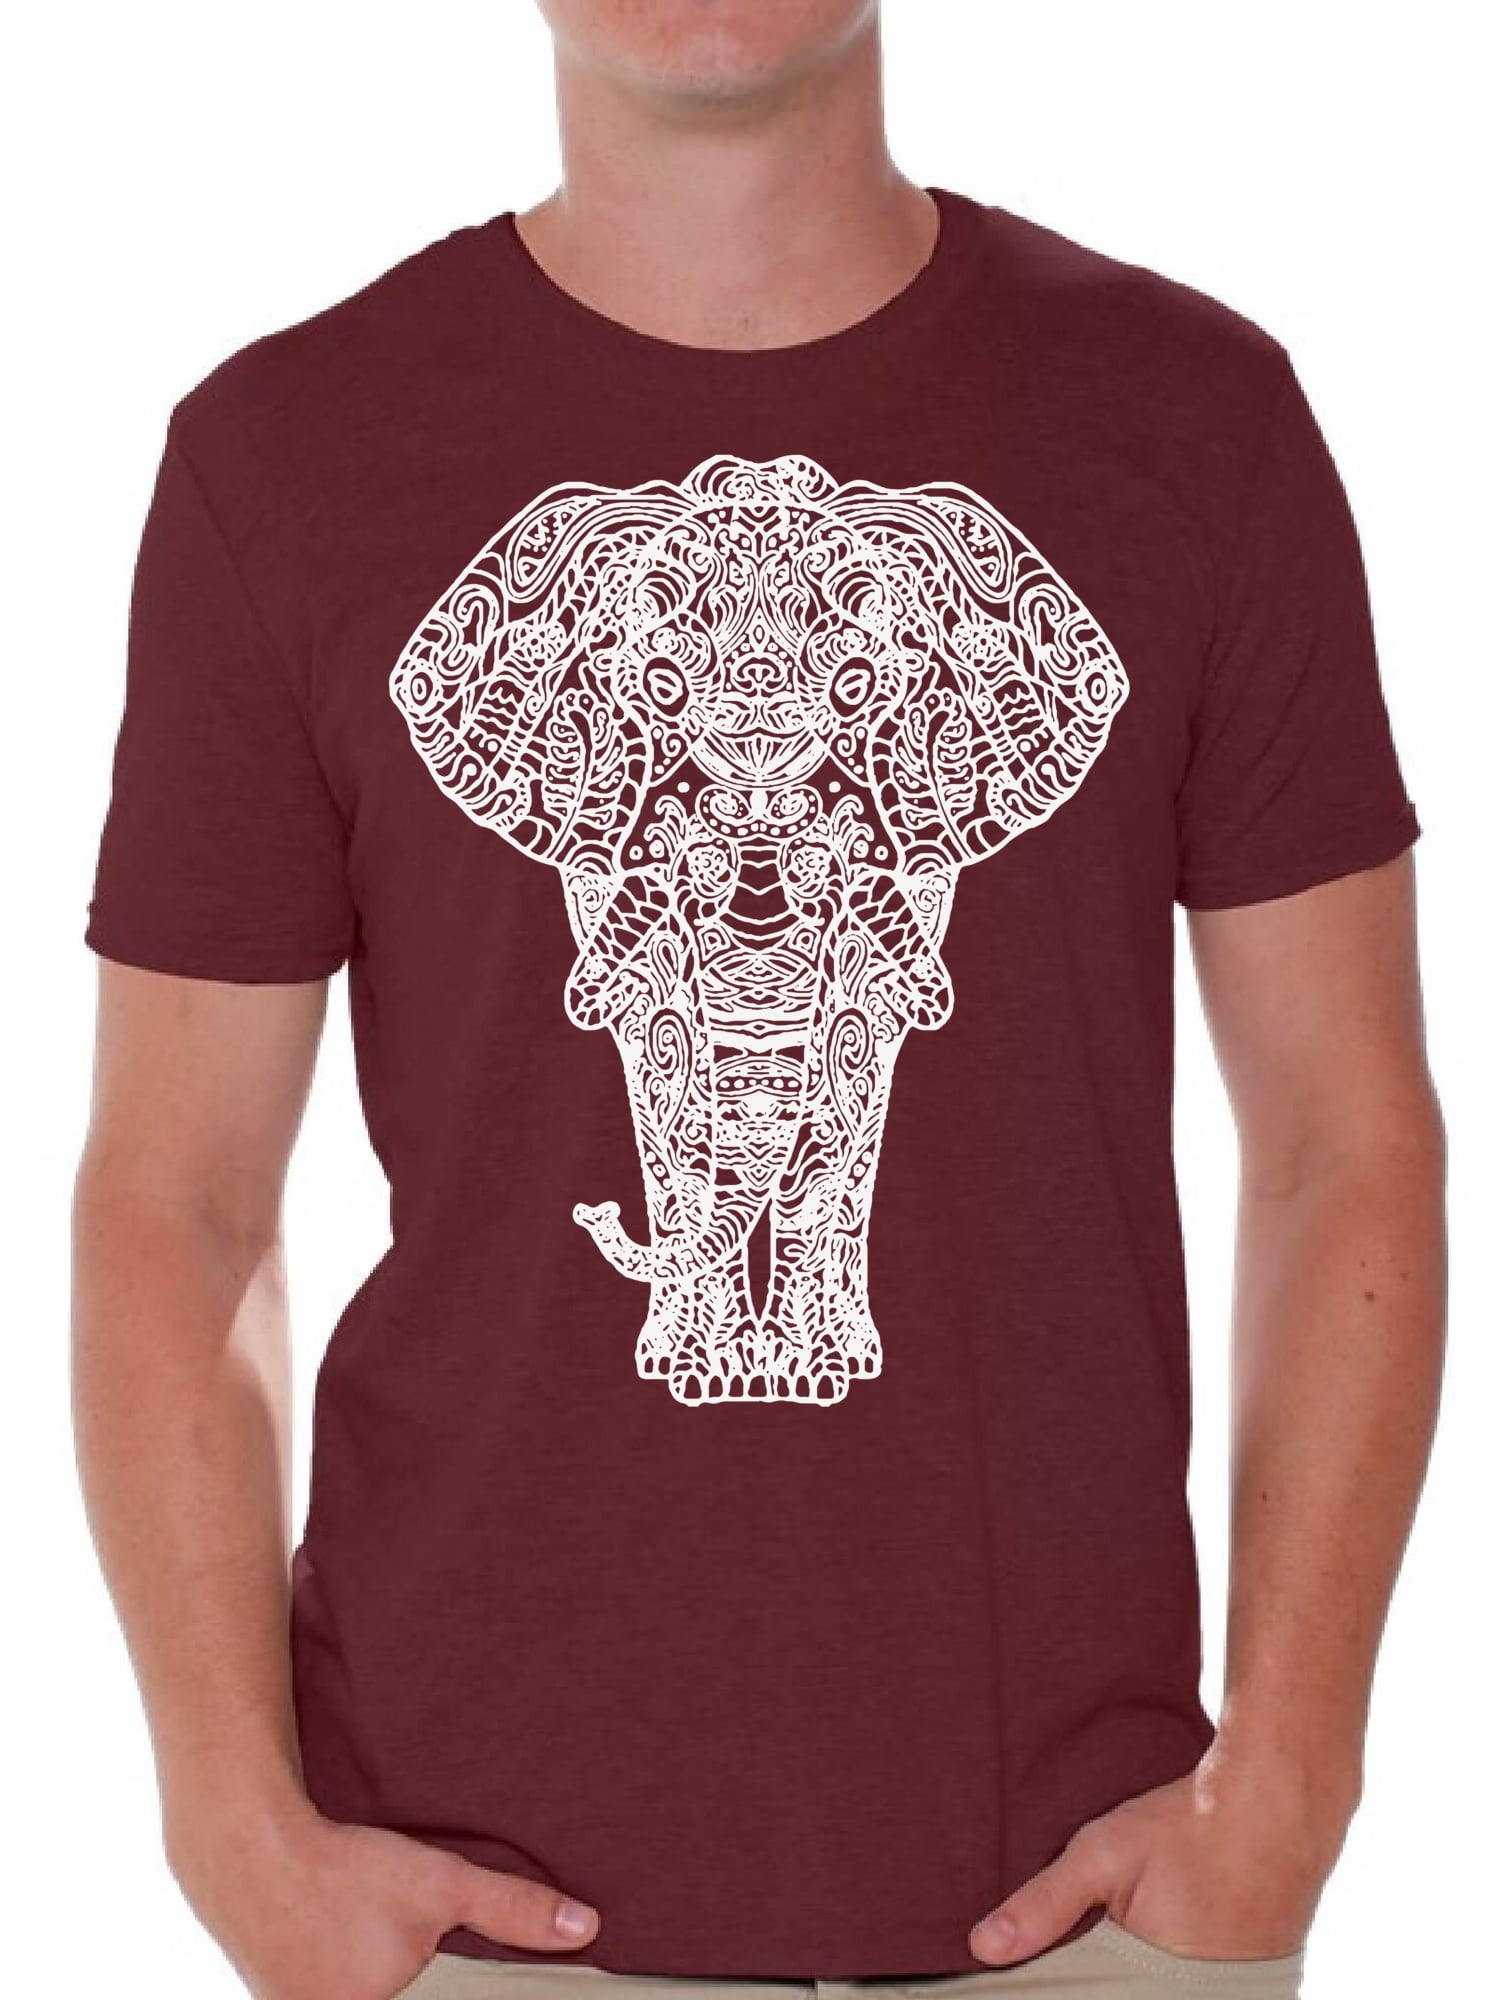 InterestPrint Mens Botton Up Shirt Indian Tribal Elephant T Shirts for Regular Fit S-5XL